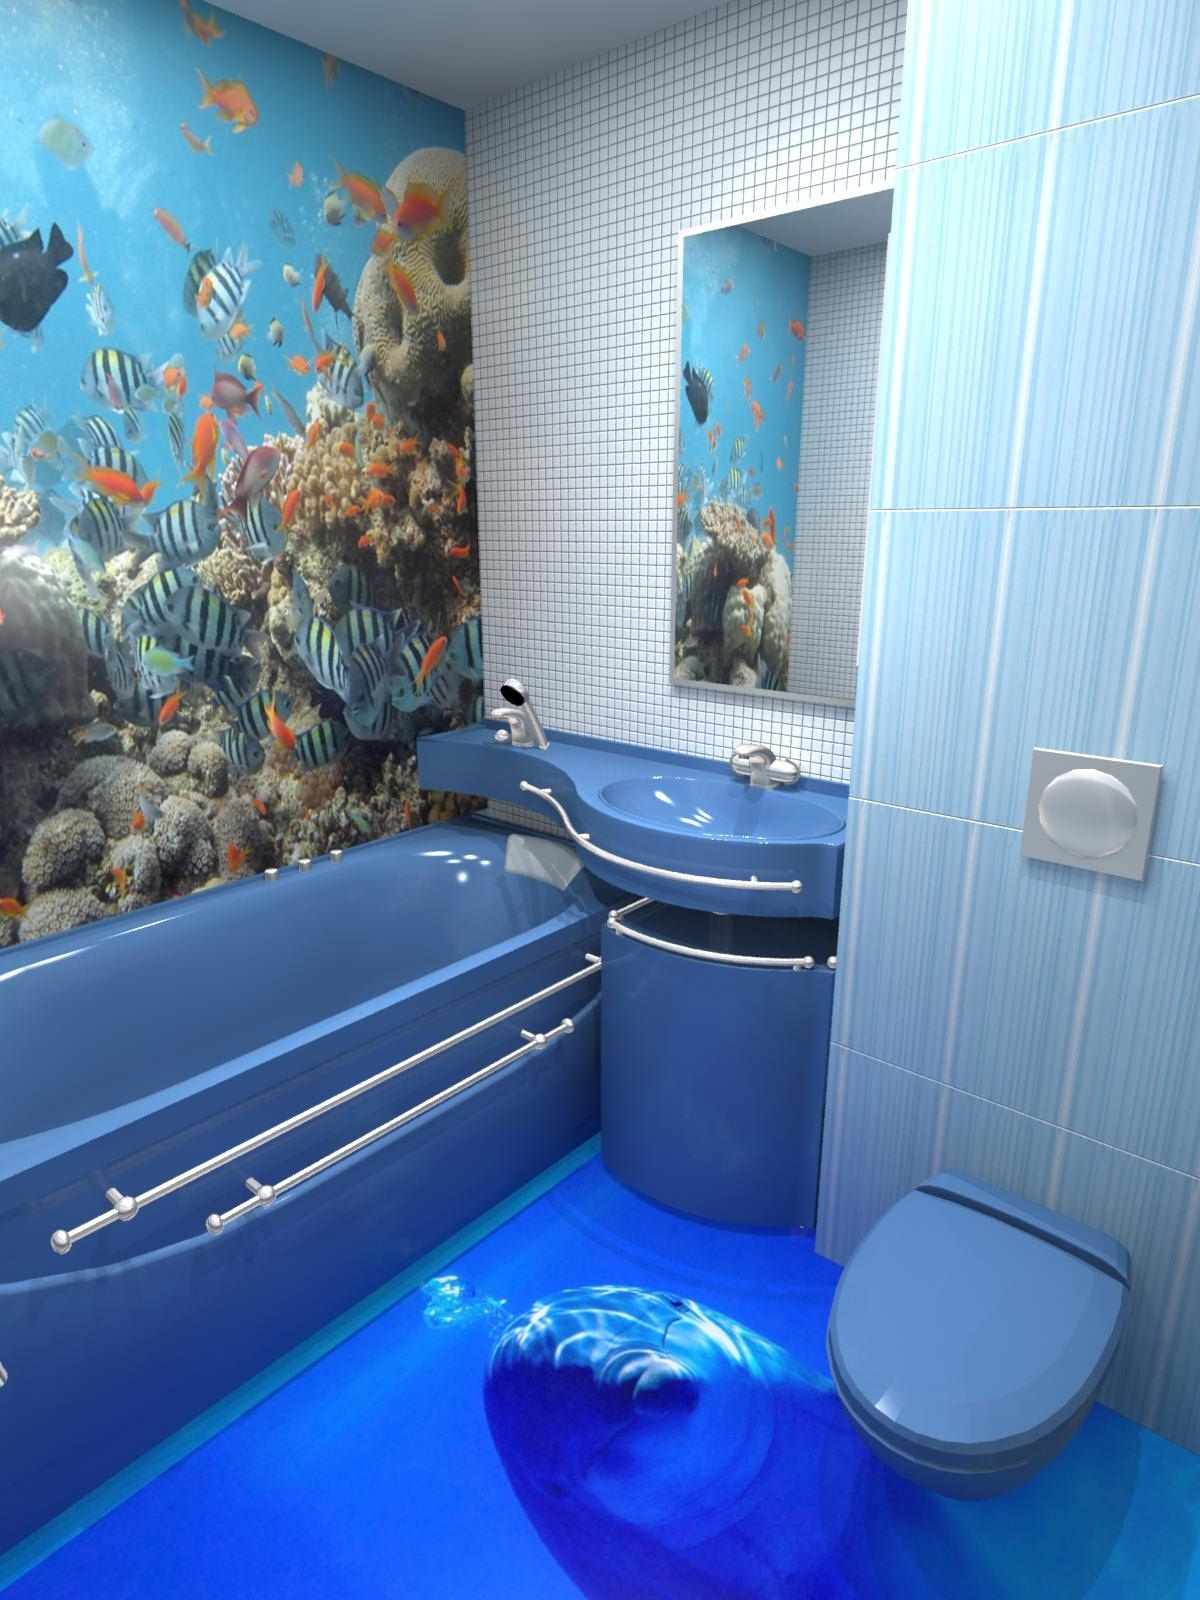 An example of a bright bathroom interior